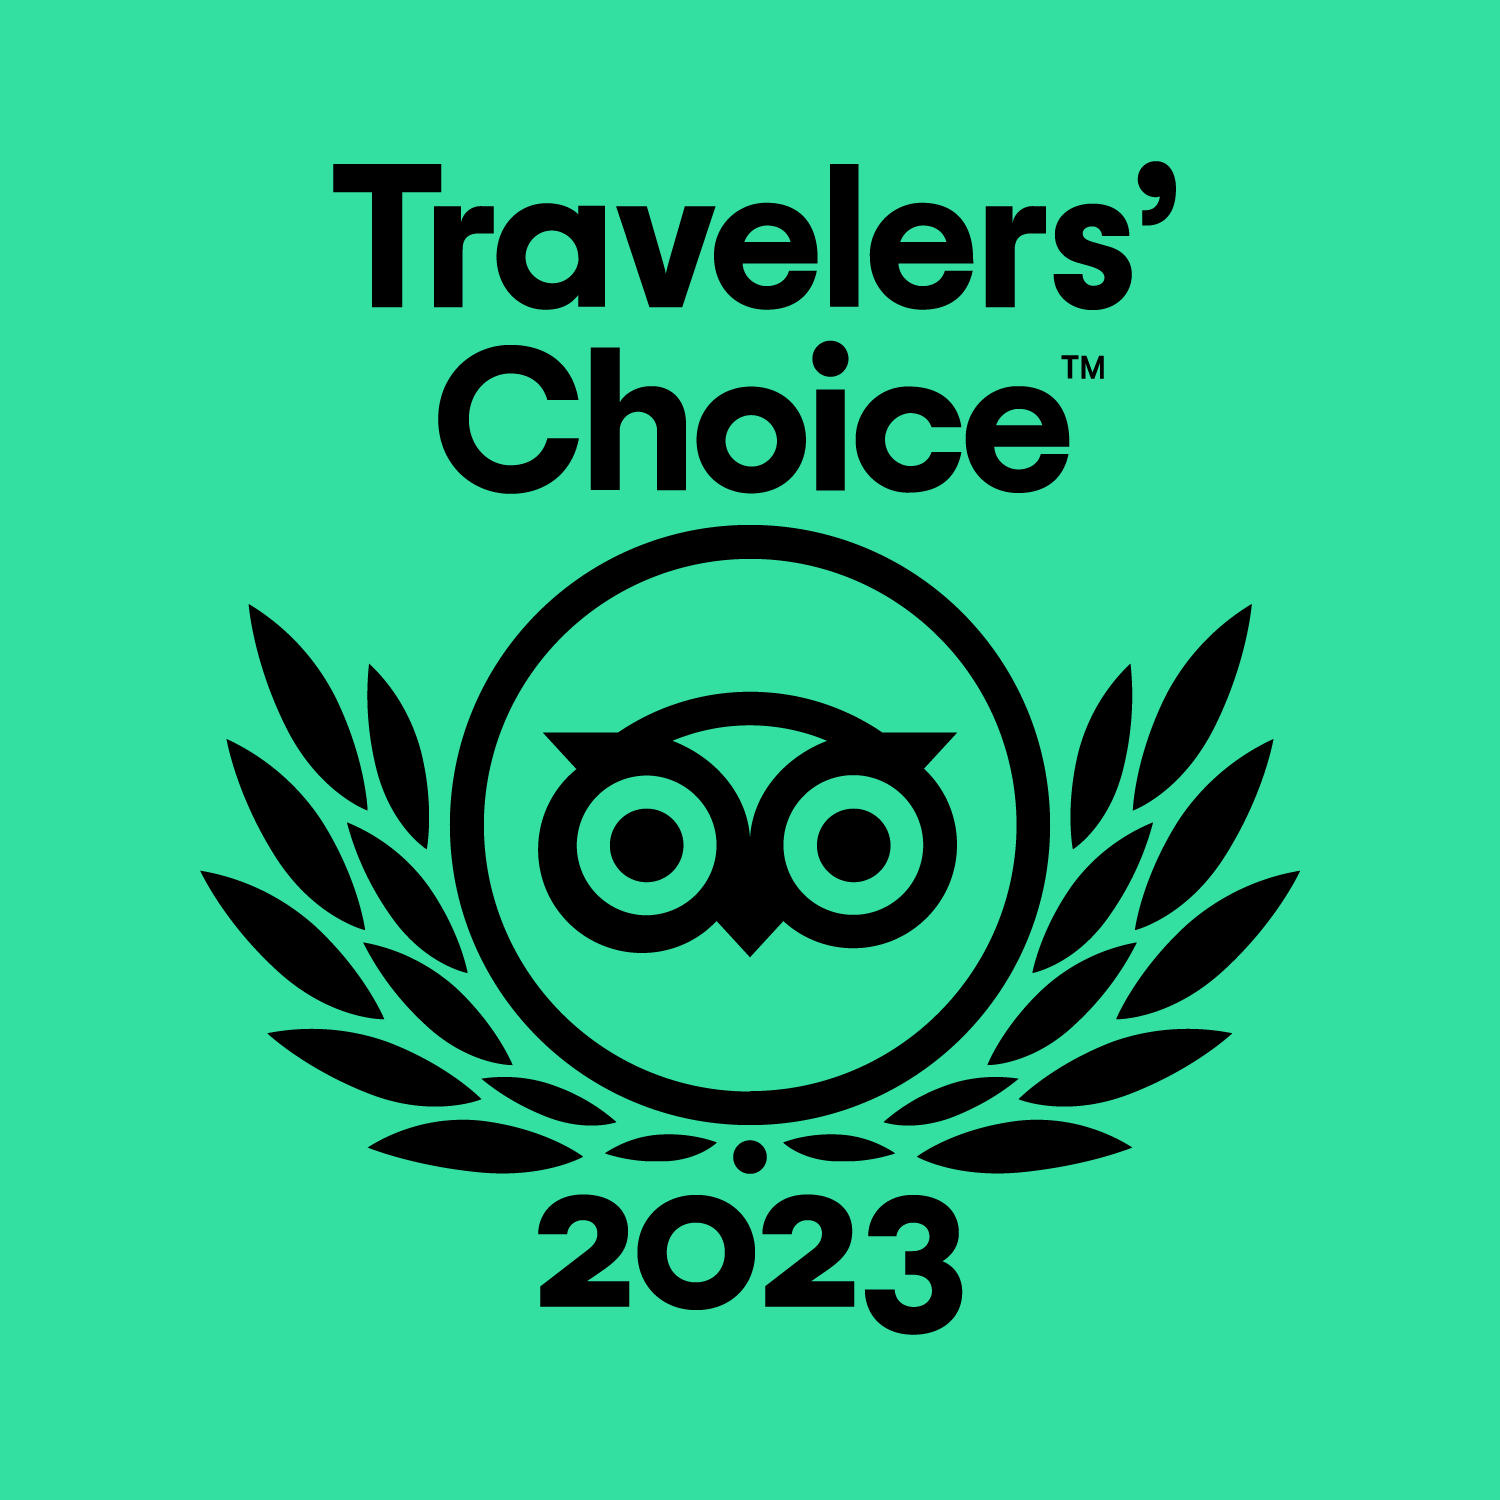 Travelers' Choice 2023